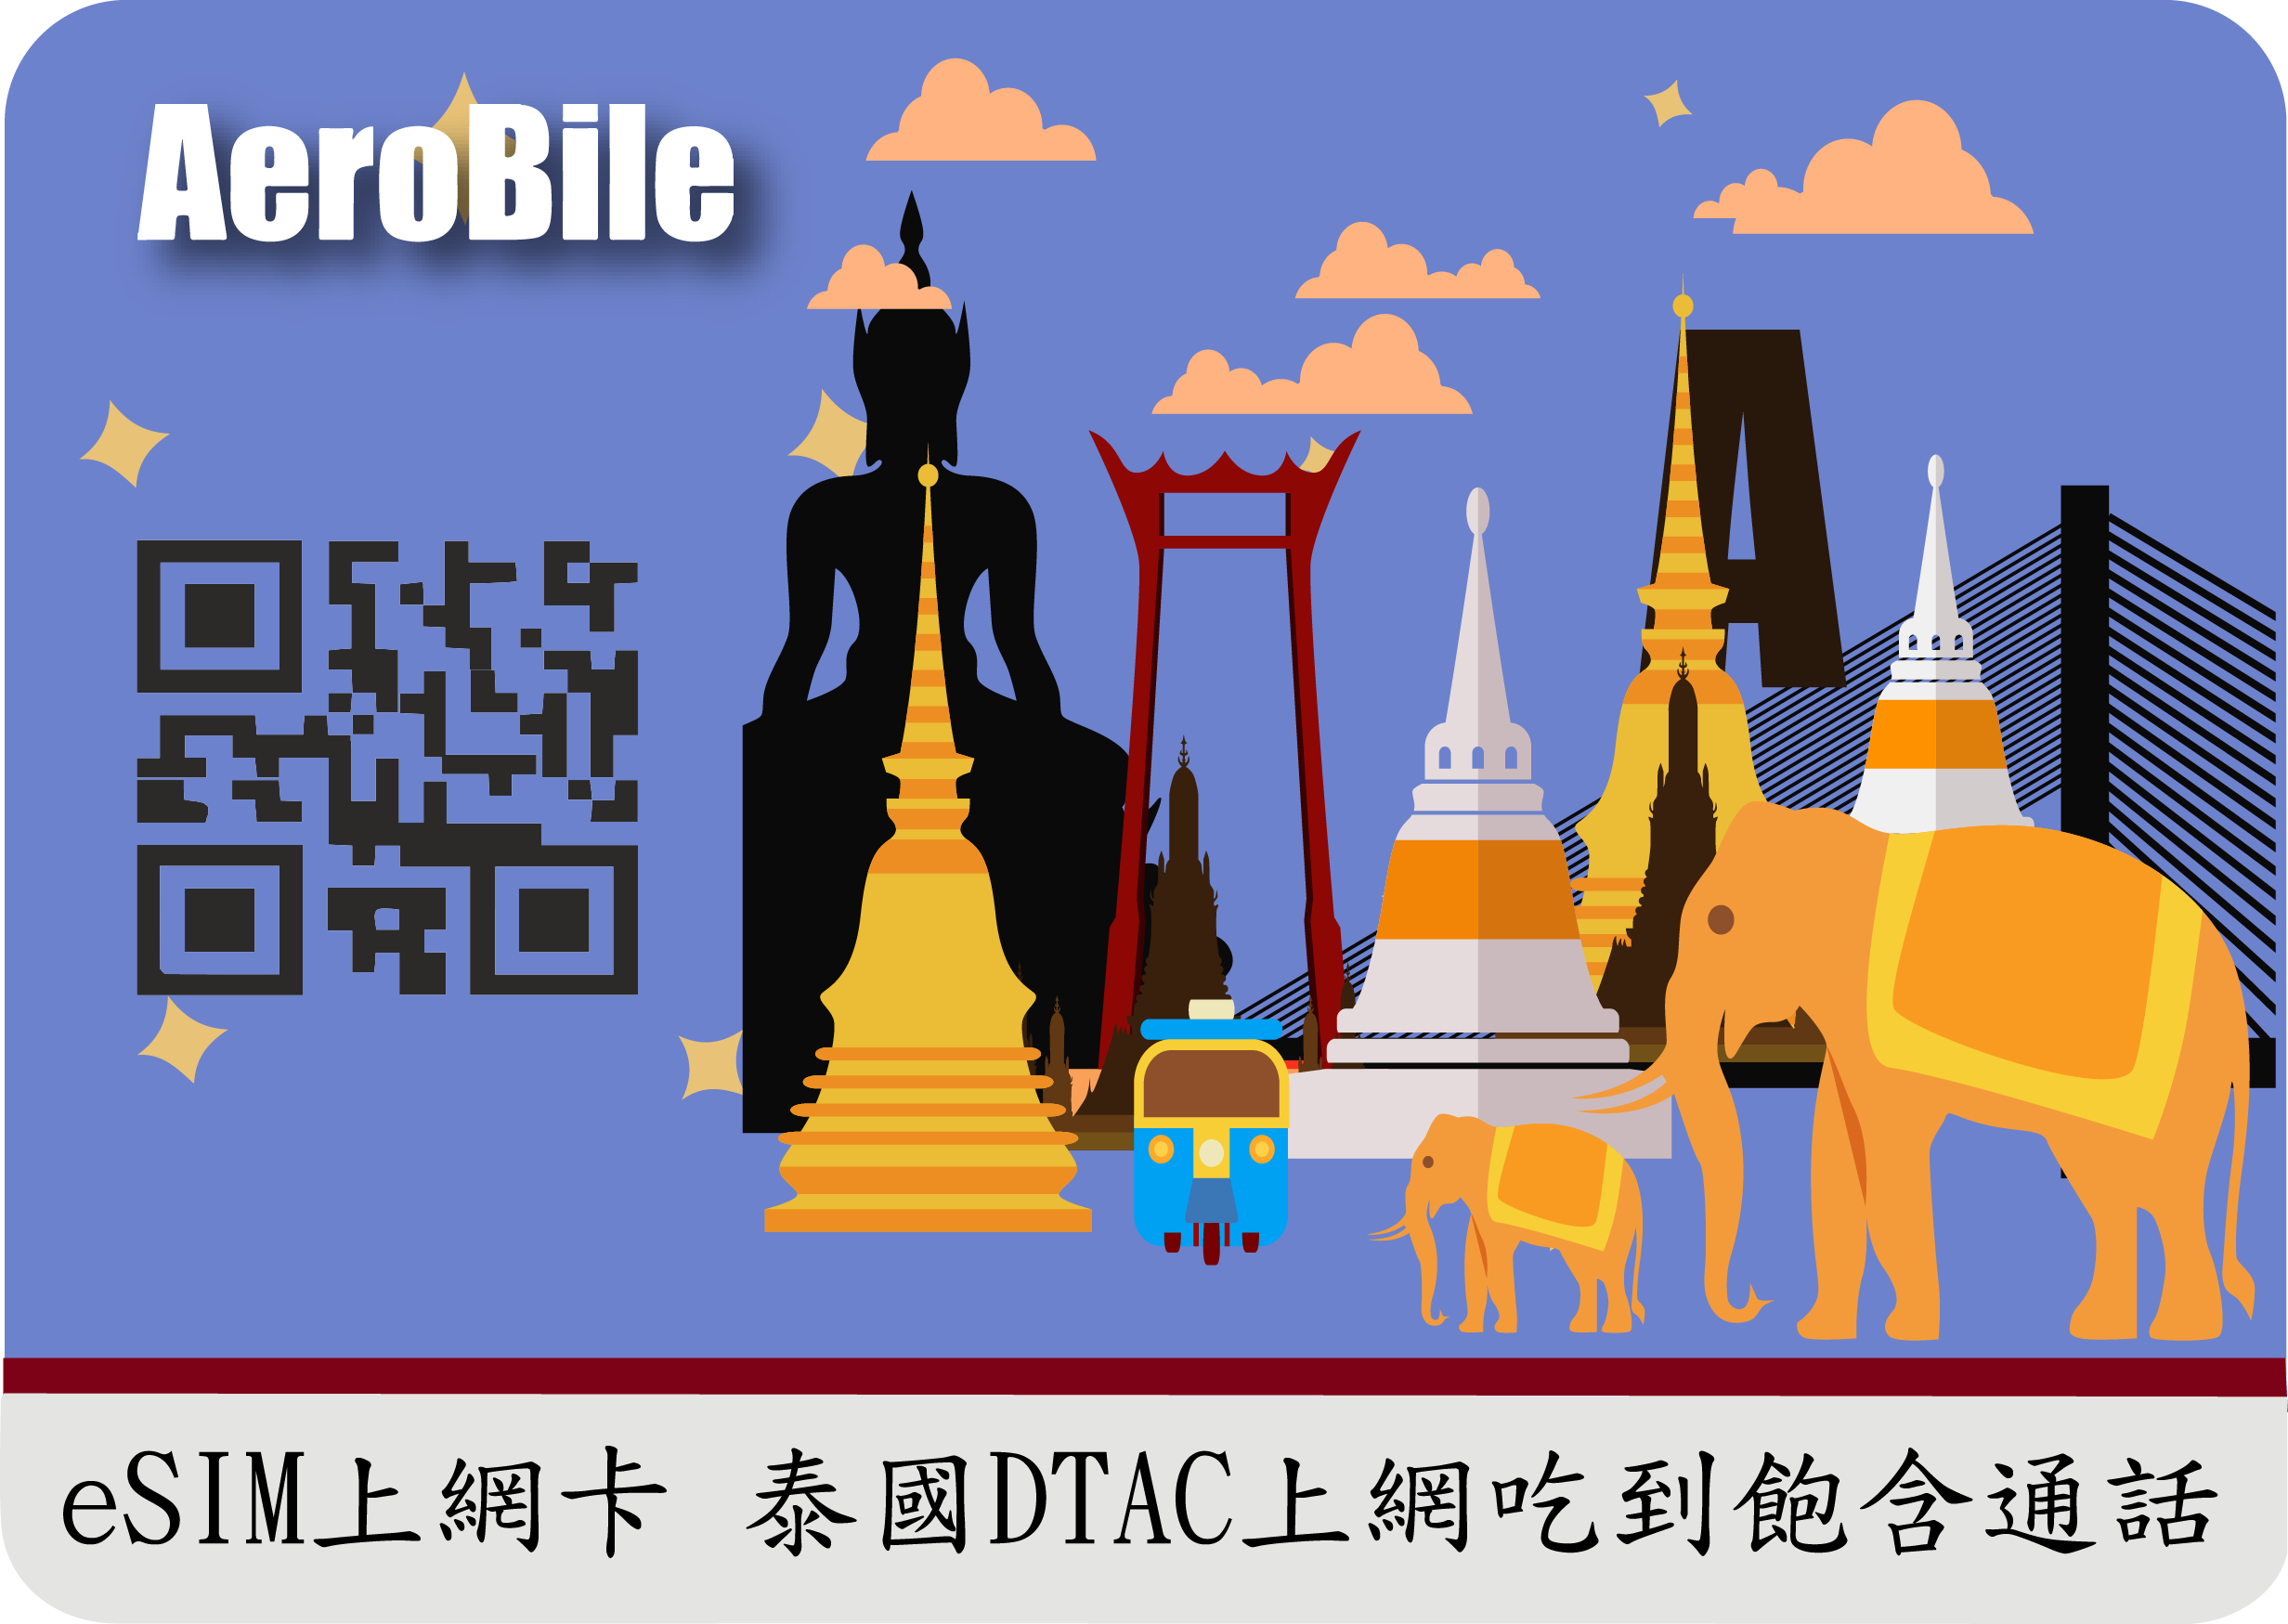 eSIM泰國DTAC高速上網 吃到飽(含泰國電話100分鐘通話+15泰銖話費) 【在台灣安裝eSIM會立即生效】